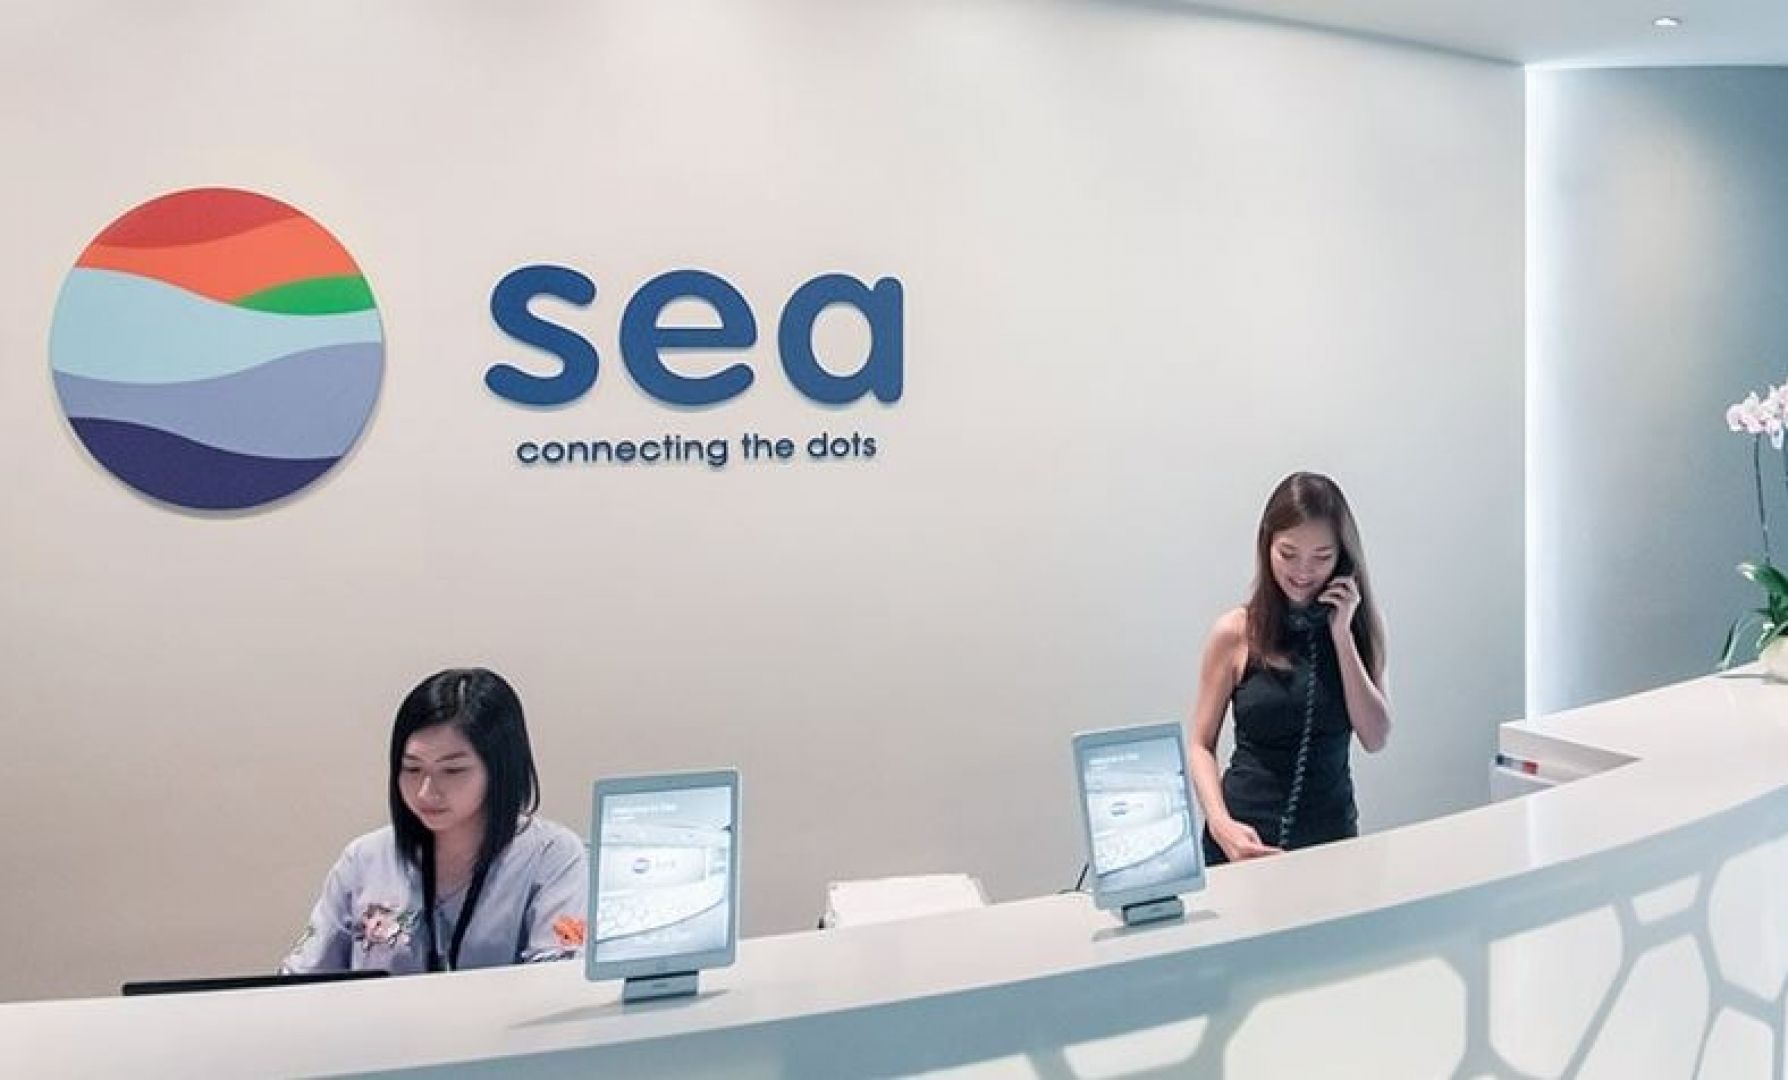 Sea Ltd's FY18 losses widen as Shopee weighs on earnings